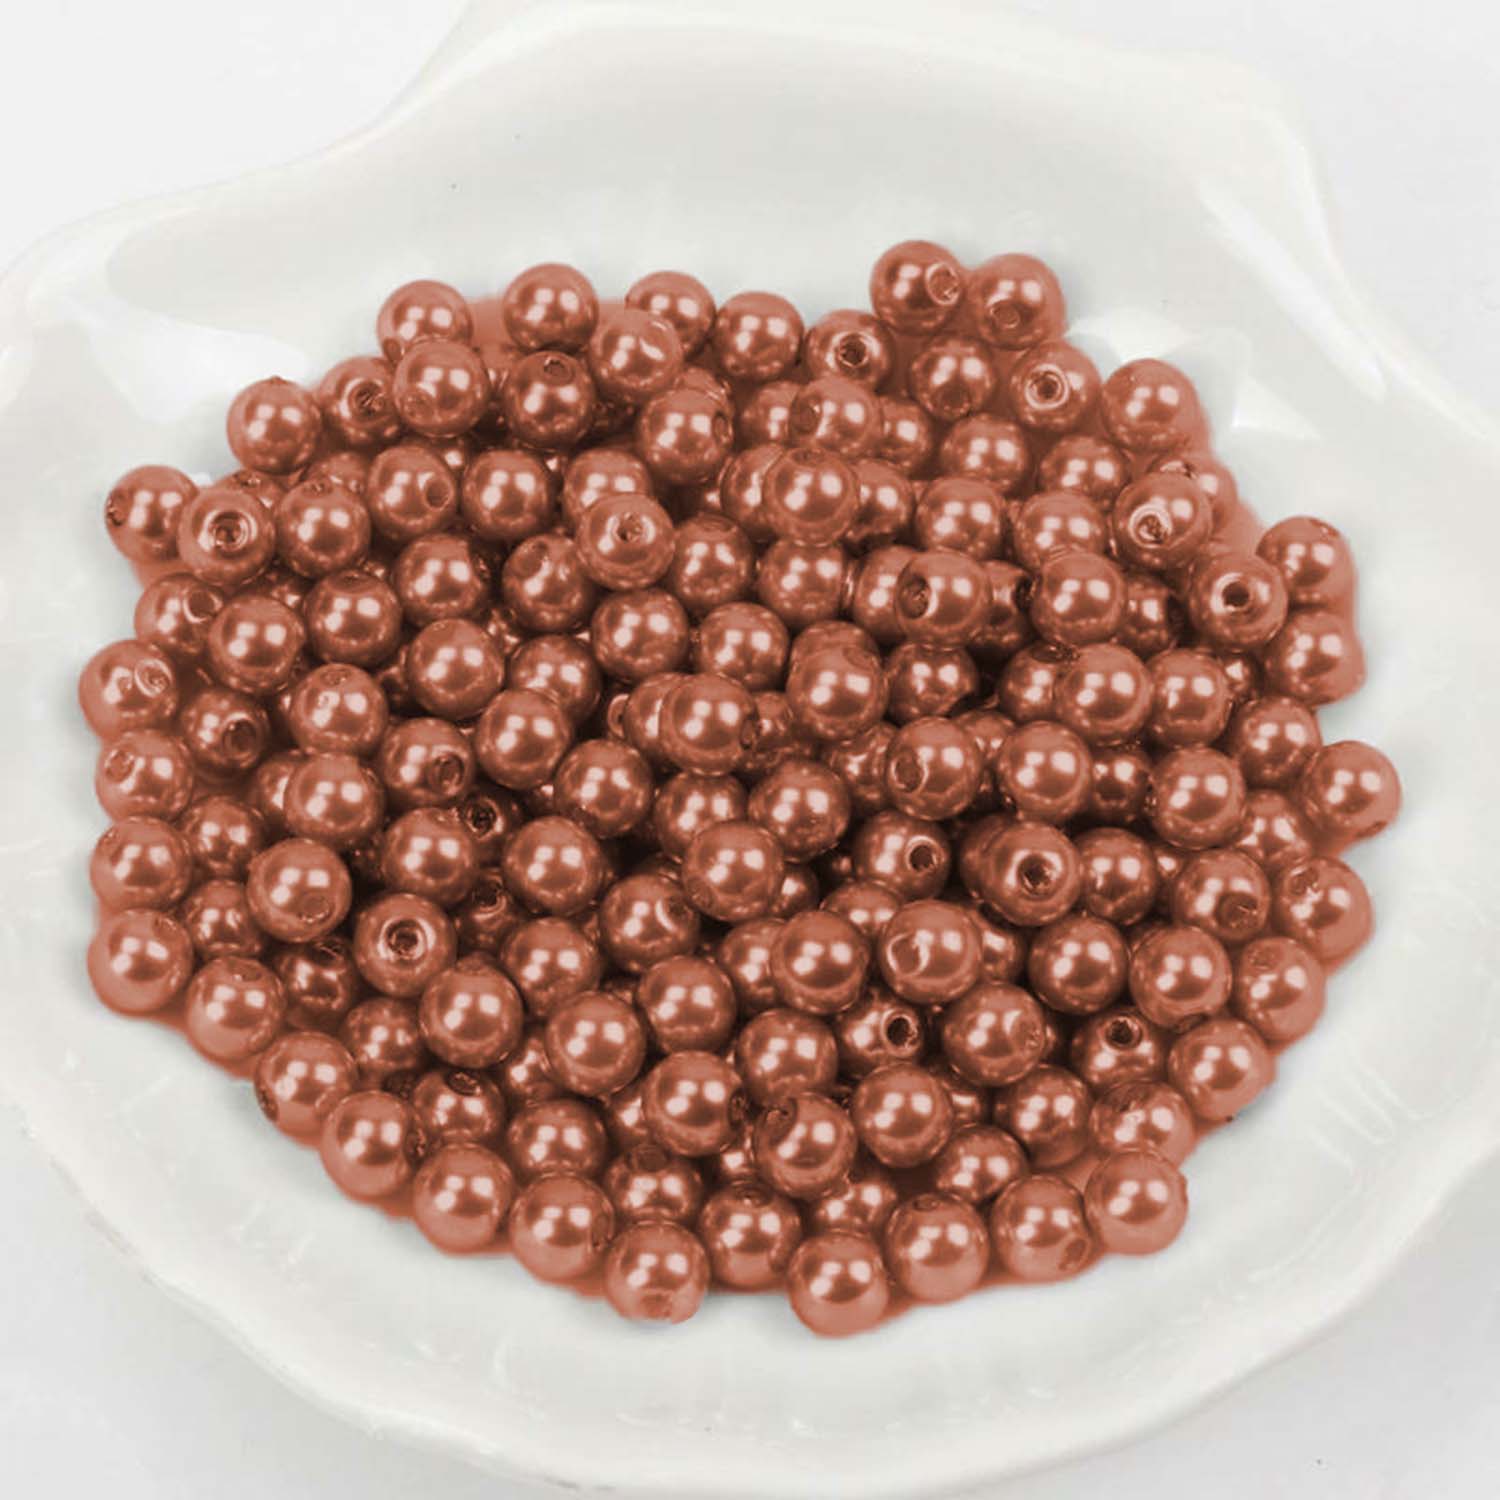 40 hübsche Kinderperlen Mix bunte Wachsperlen 6-10 mm Loch 1,5-2 mm glänzend 